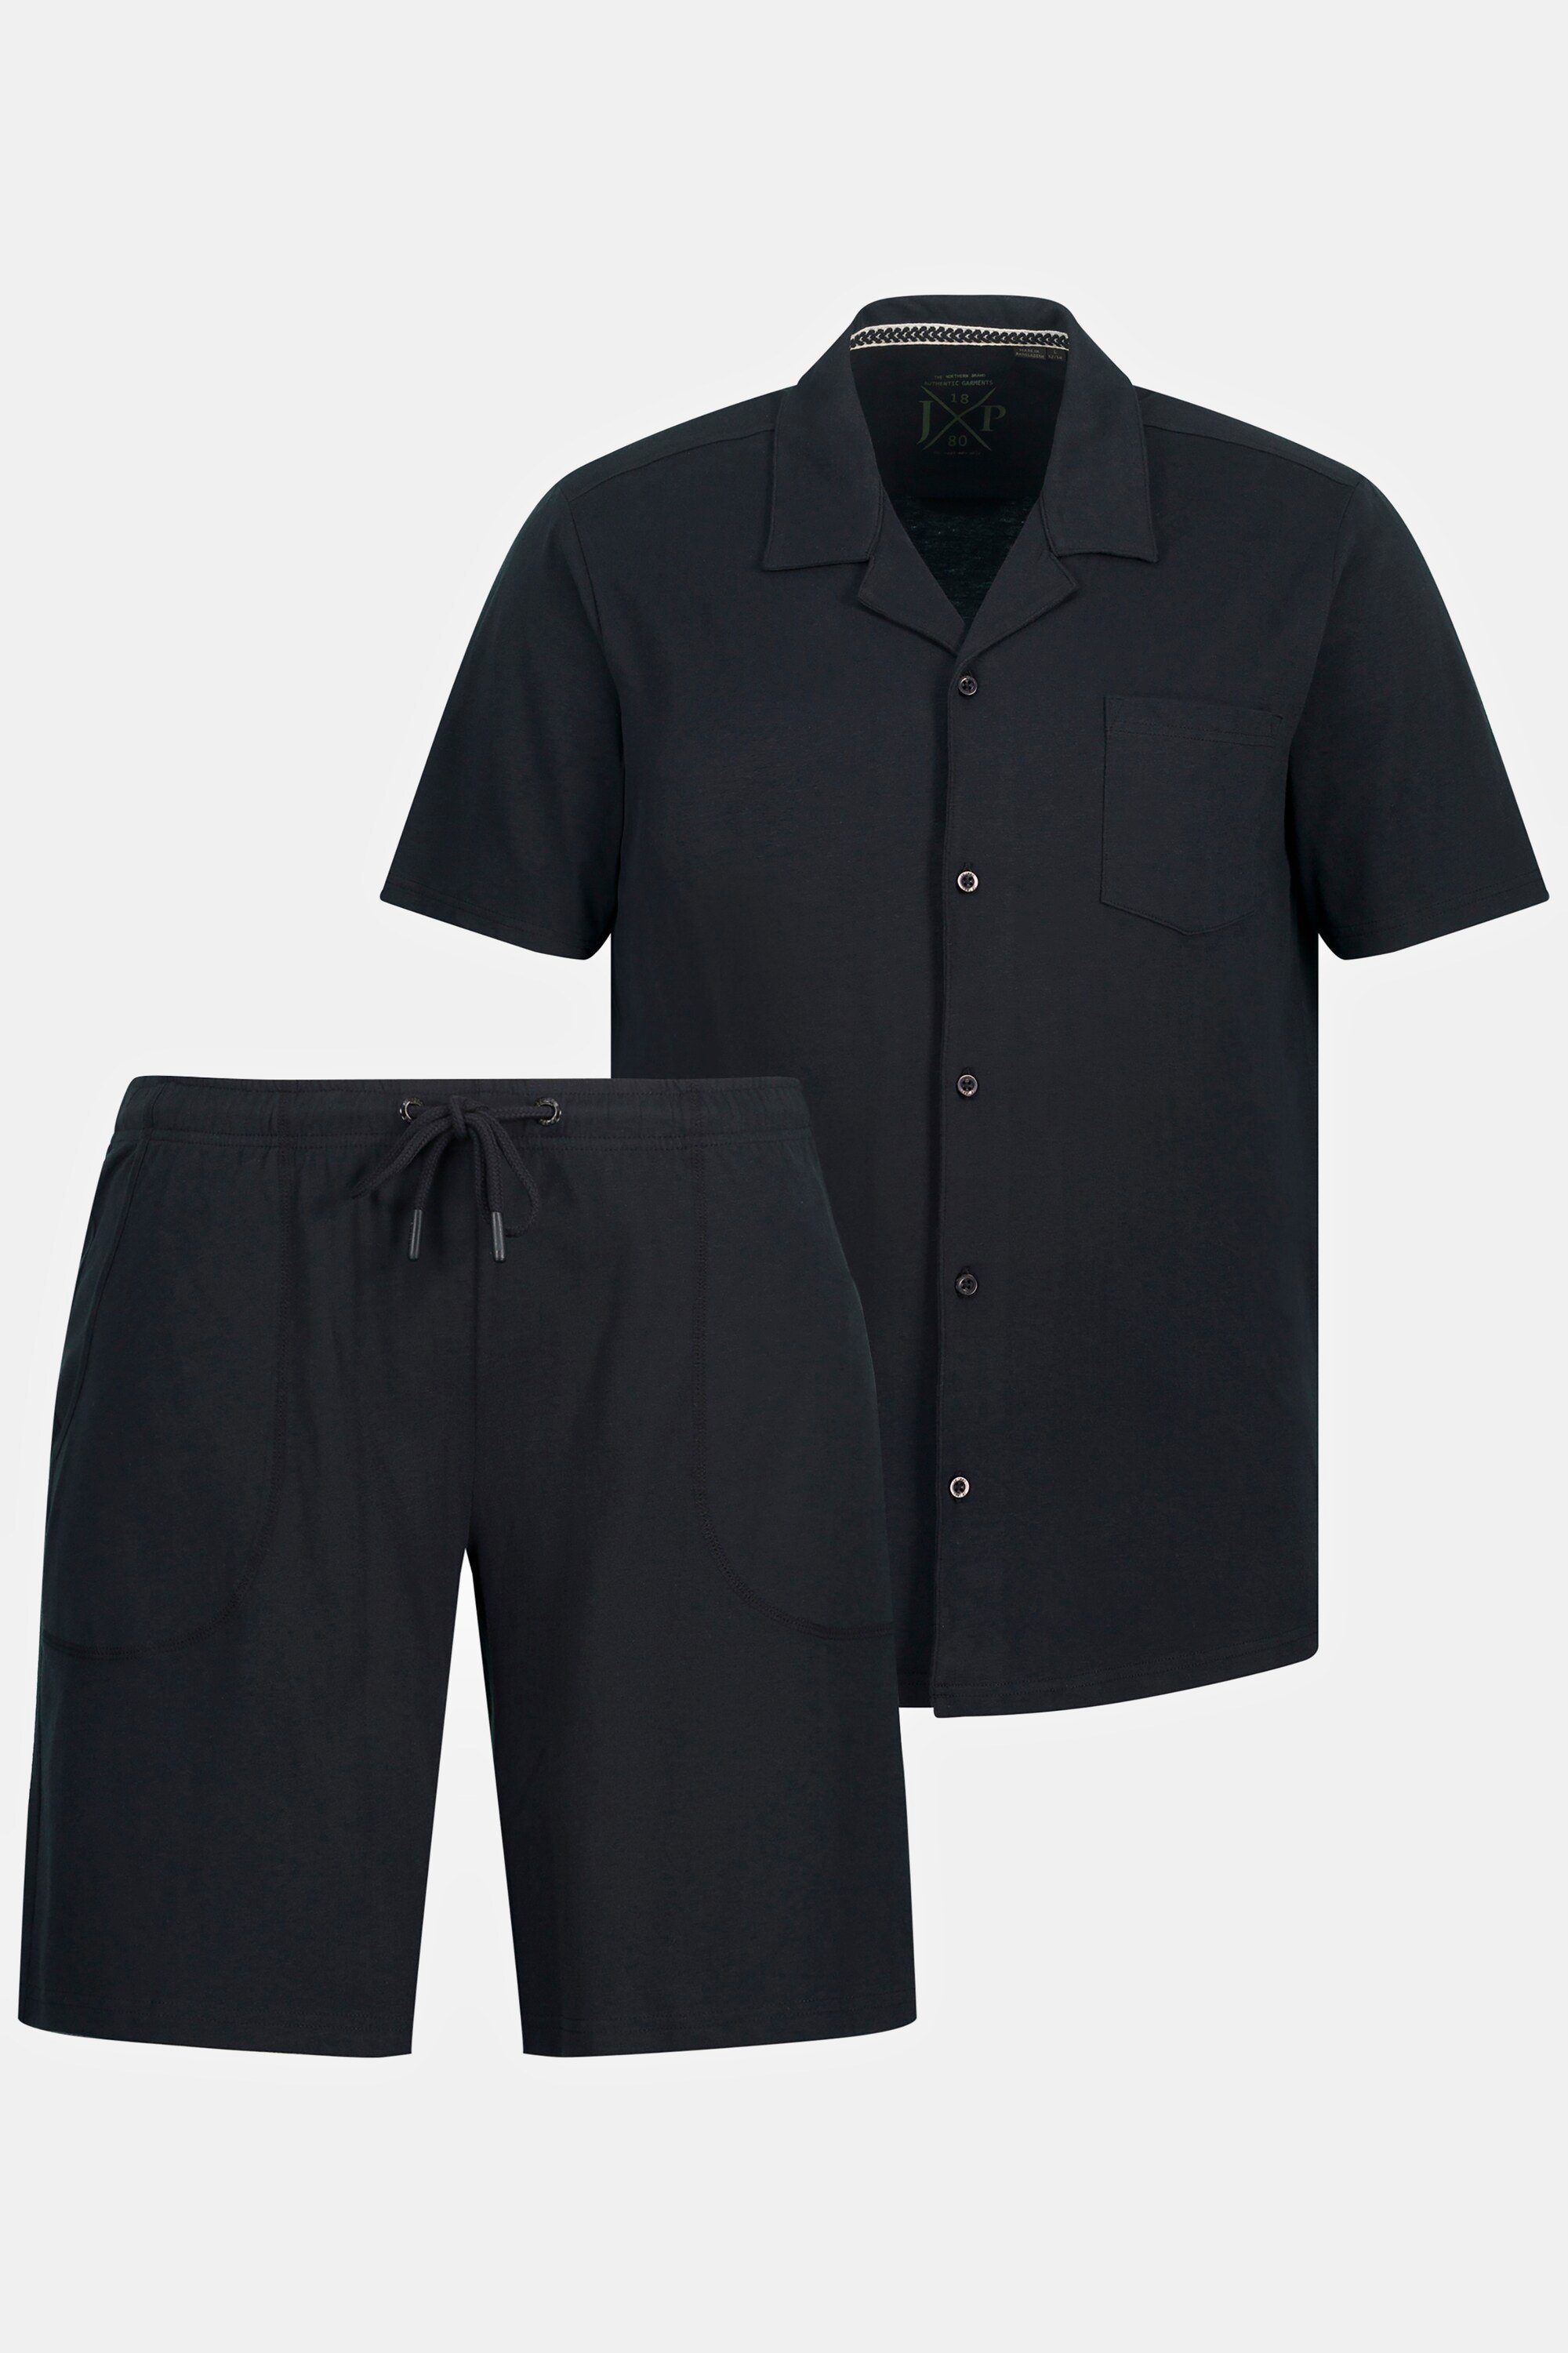 Cuba Shorts Schlafanzug Schlafanzug Oberteil Kragen JP1880 Homewear